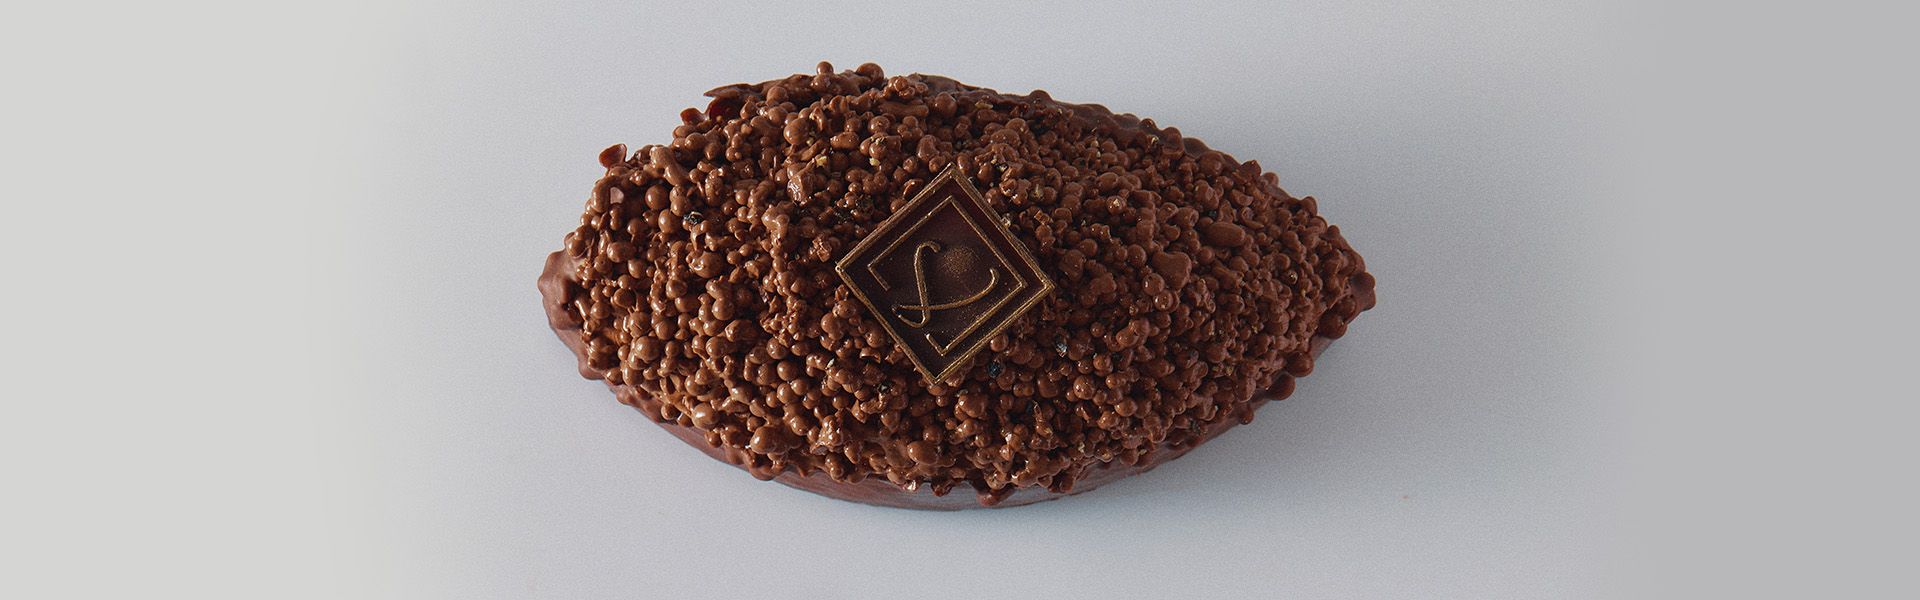 Tellicherry pepper chocolate loaf